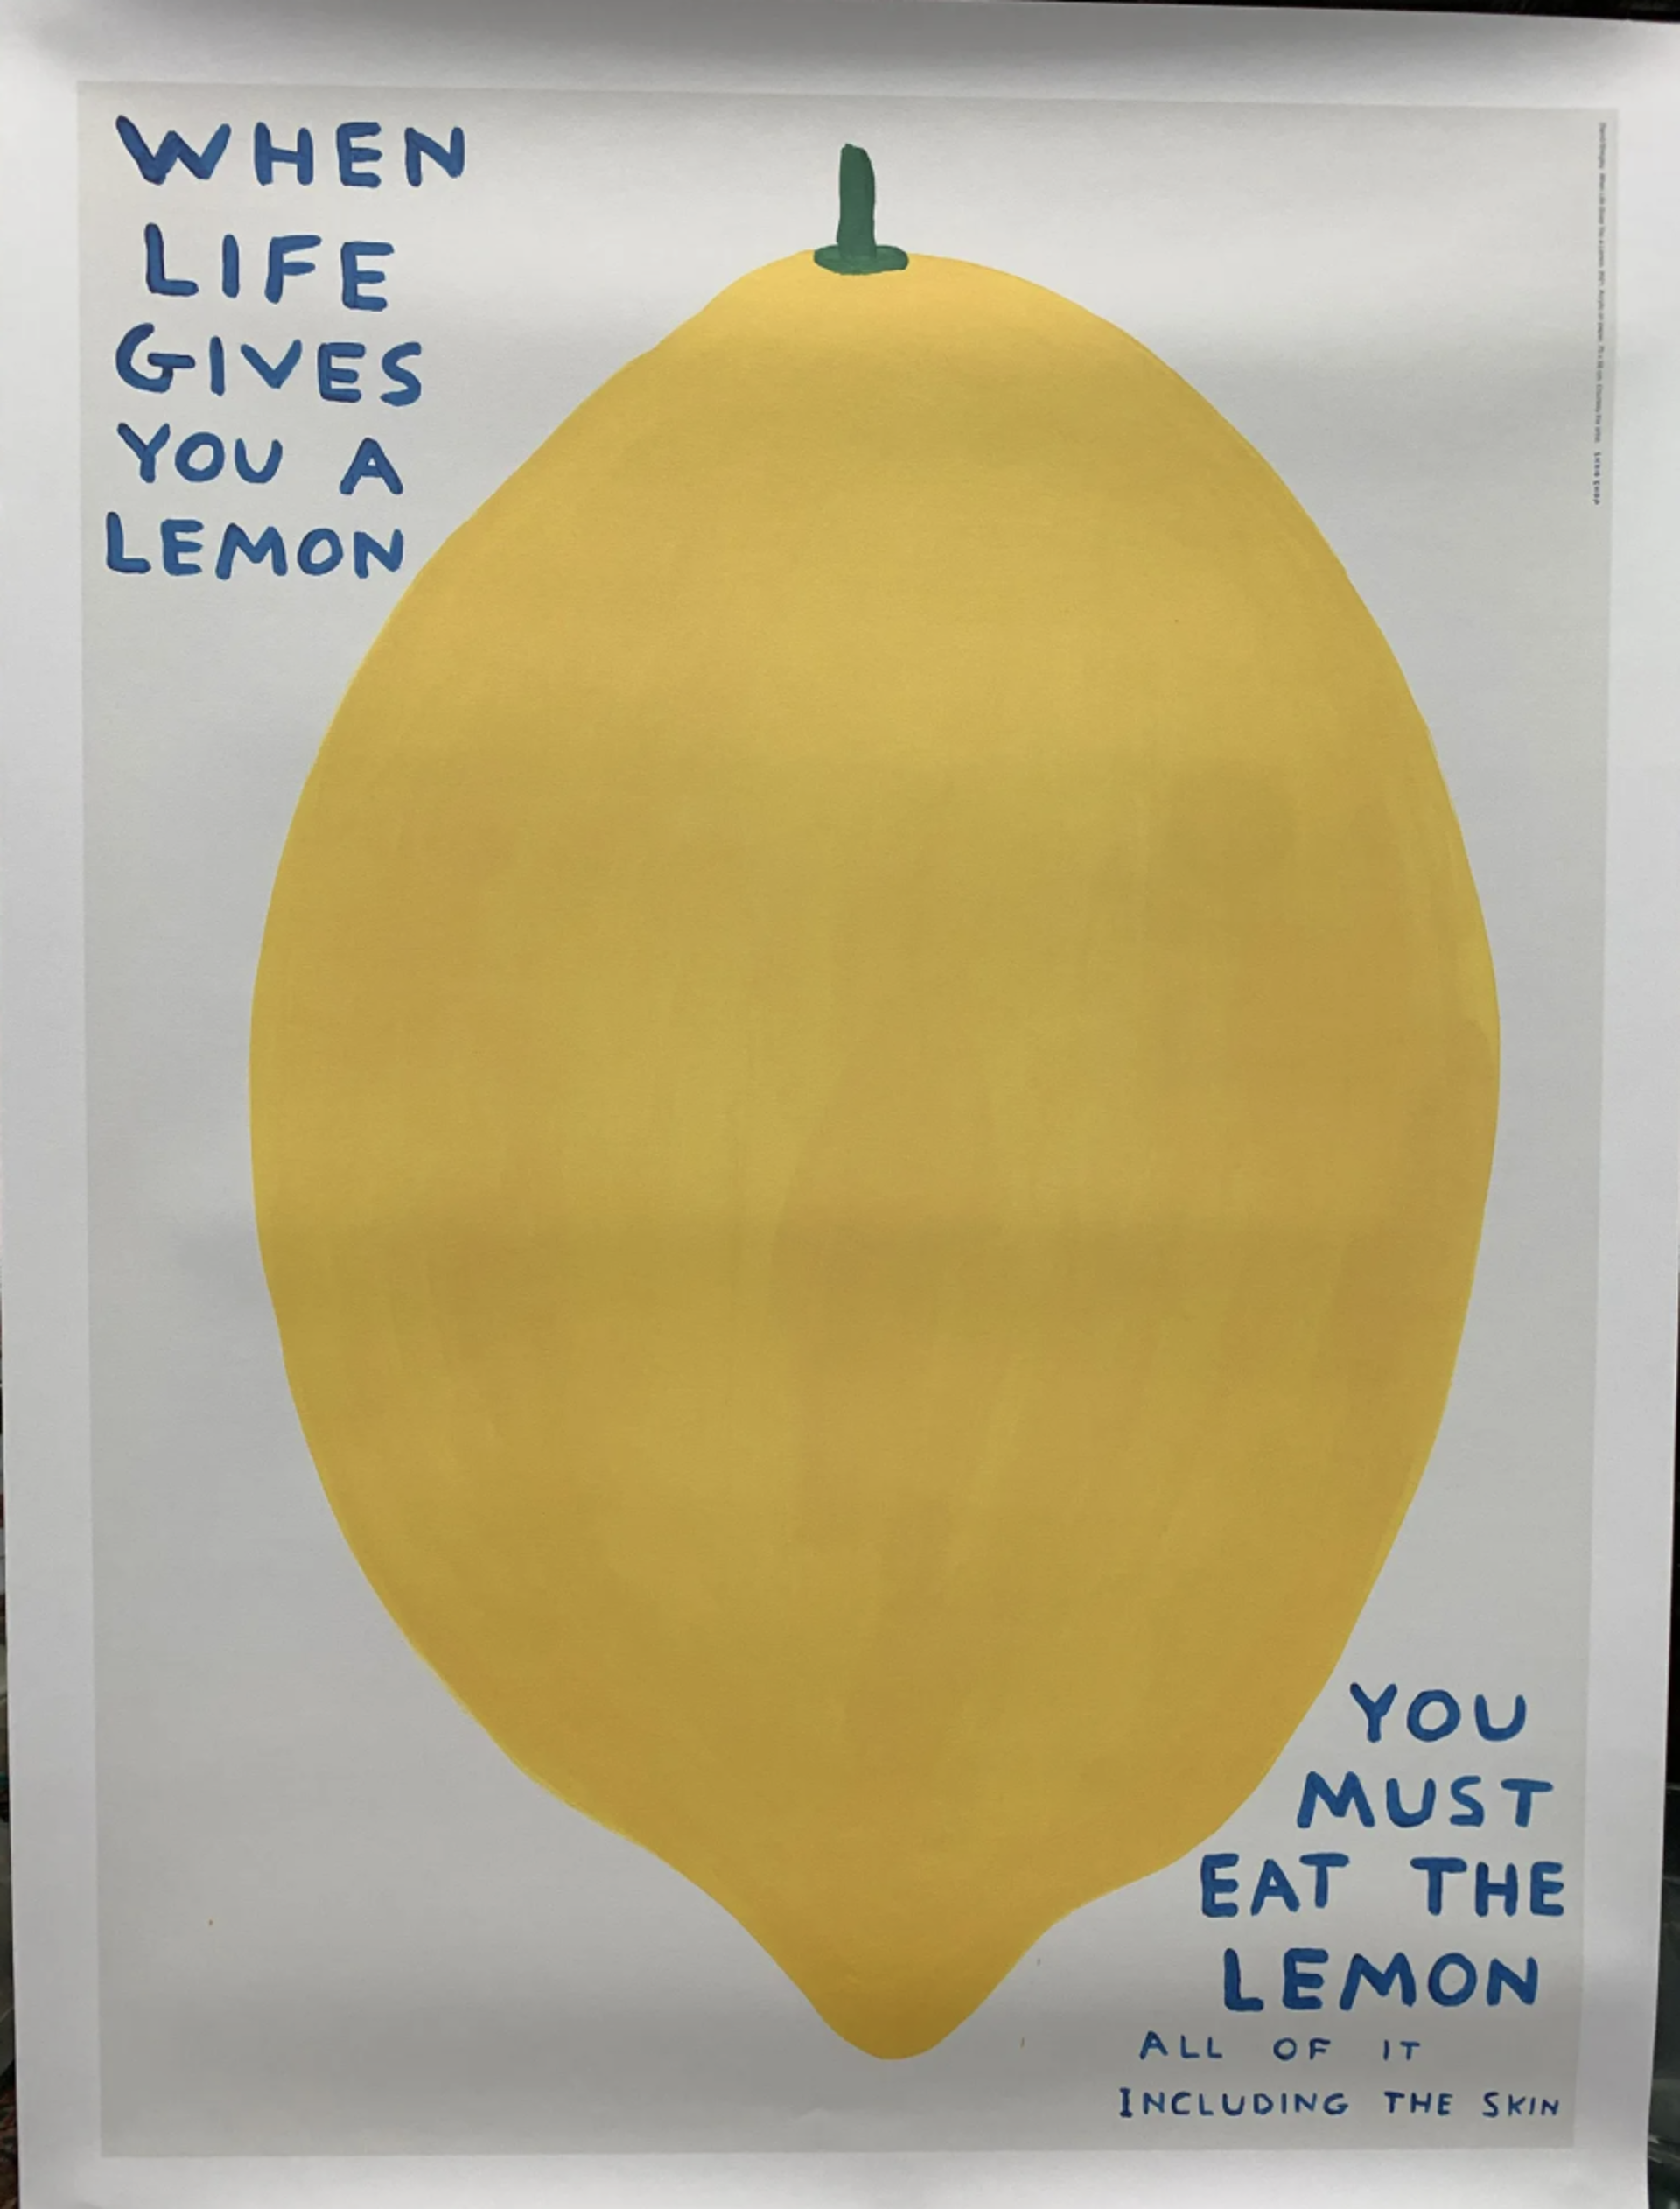 When Life Gives You a Lemon by David Shigley